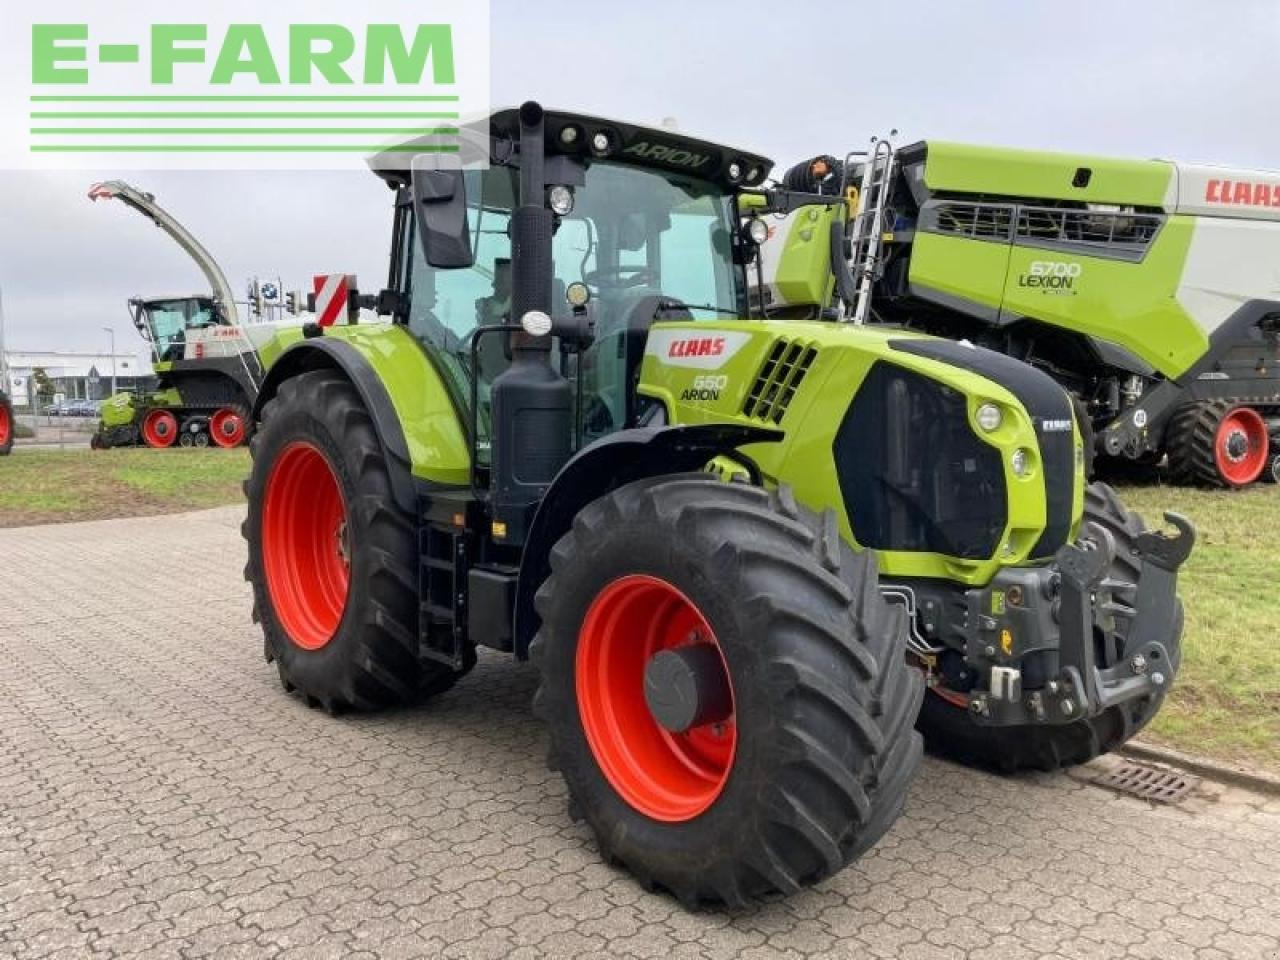 Farm tractor CLAAS arion 660 cmatic